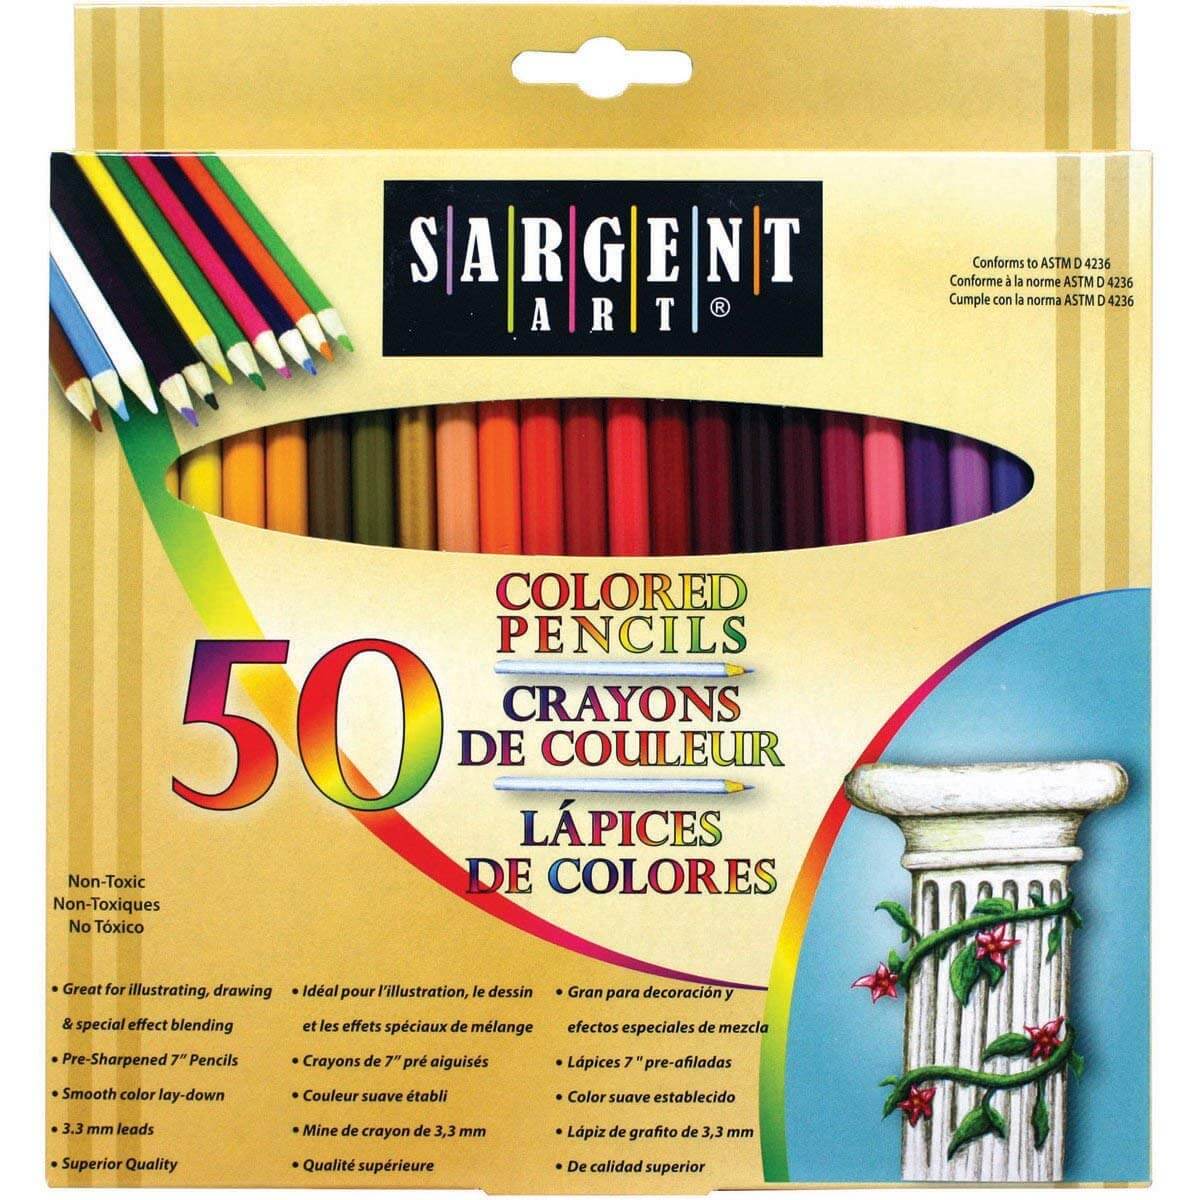 https://restylegraphic.com/wp-content/uploads/2019/05/Sargent-Coloring-Pencils.jpg